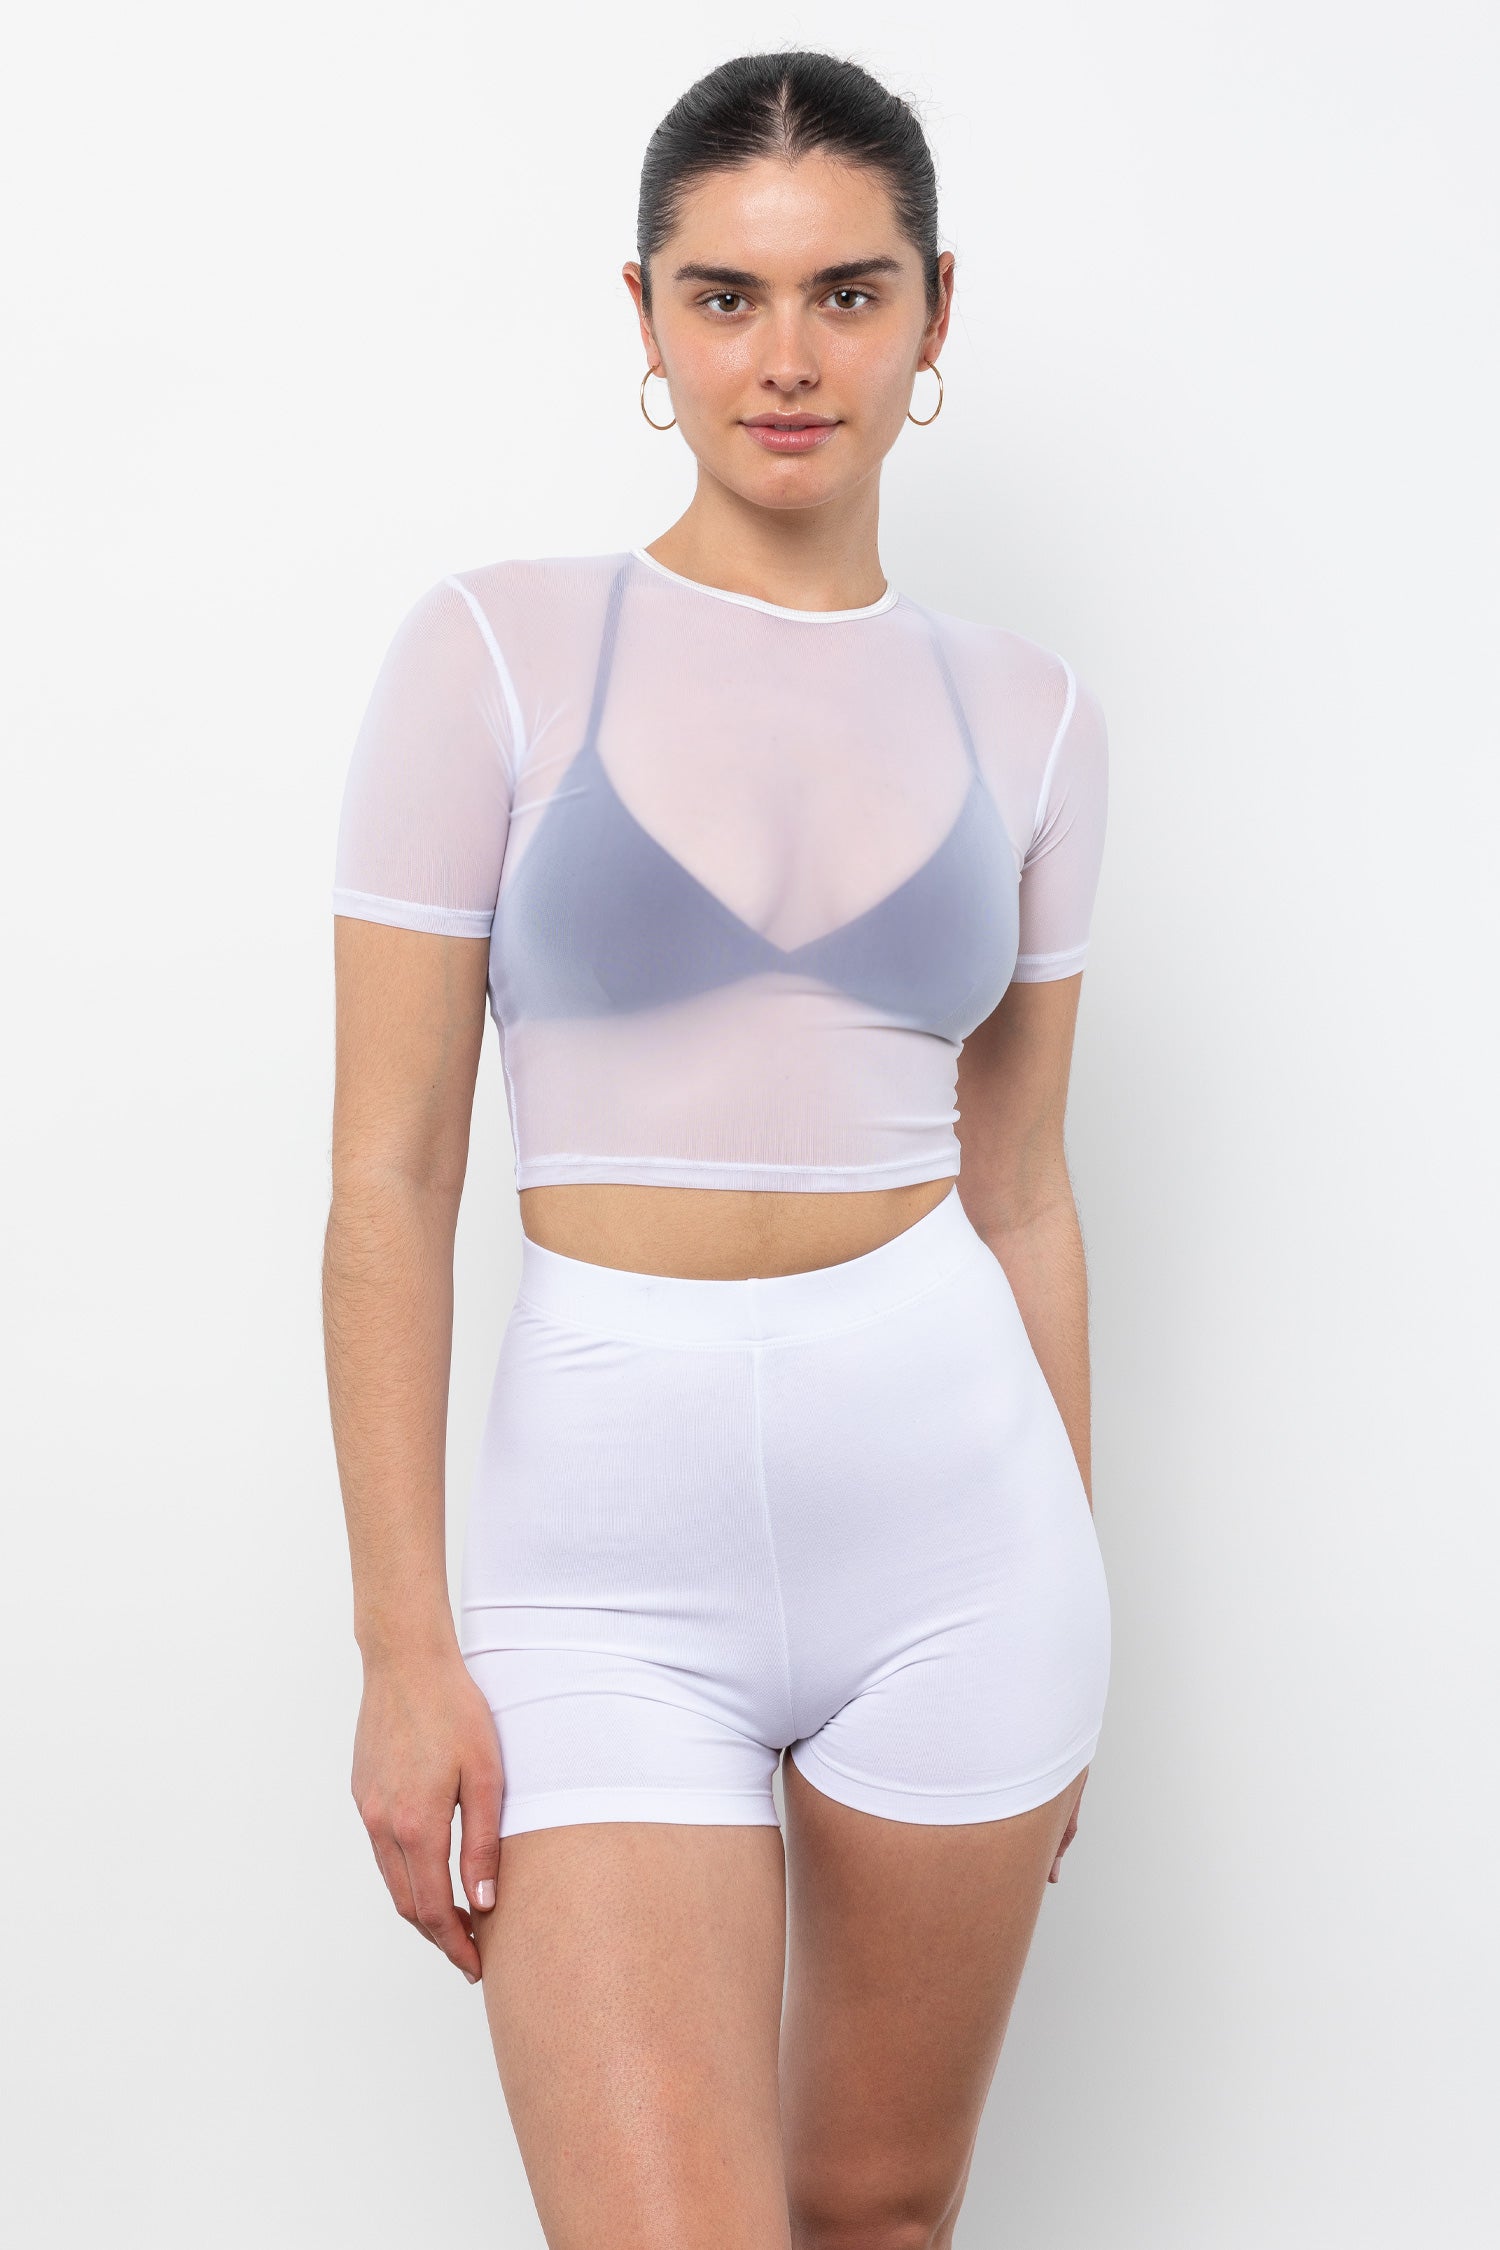 Buy Wholesale China Factory Price Crop Top Short Sleeve Bikini Set